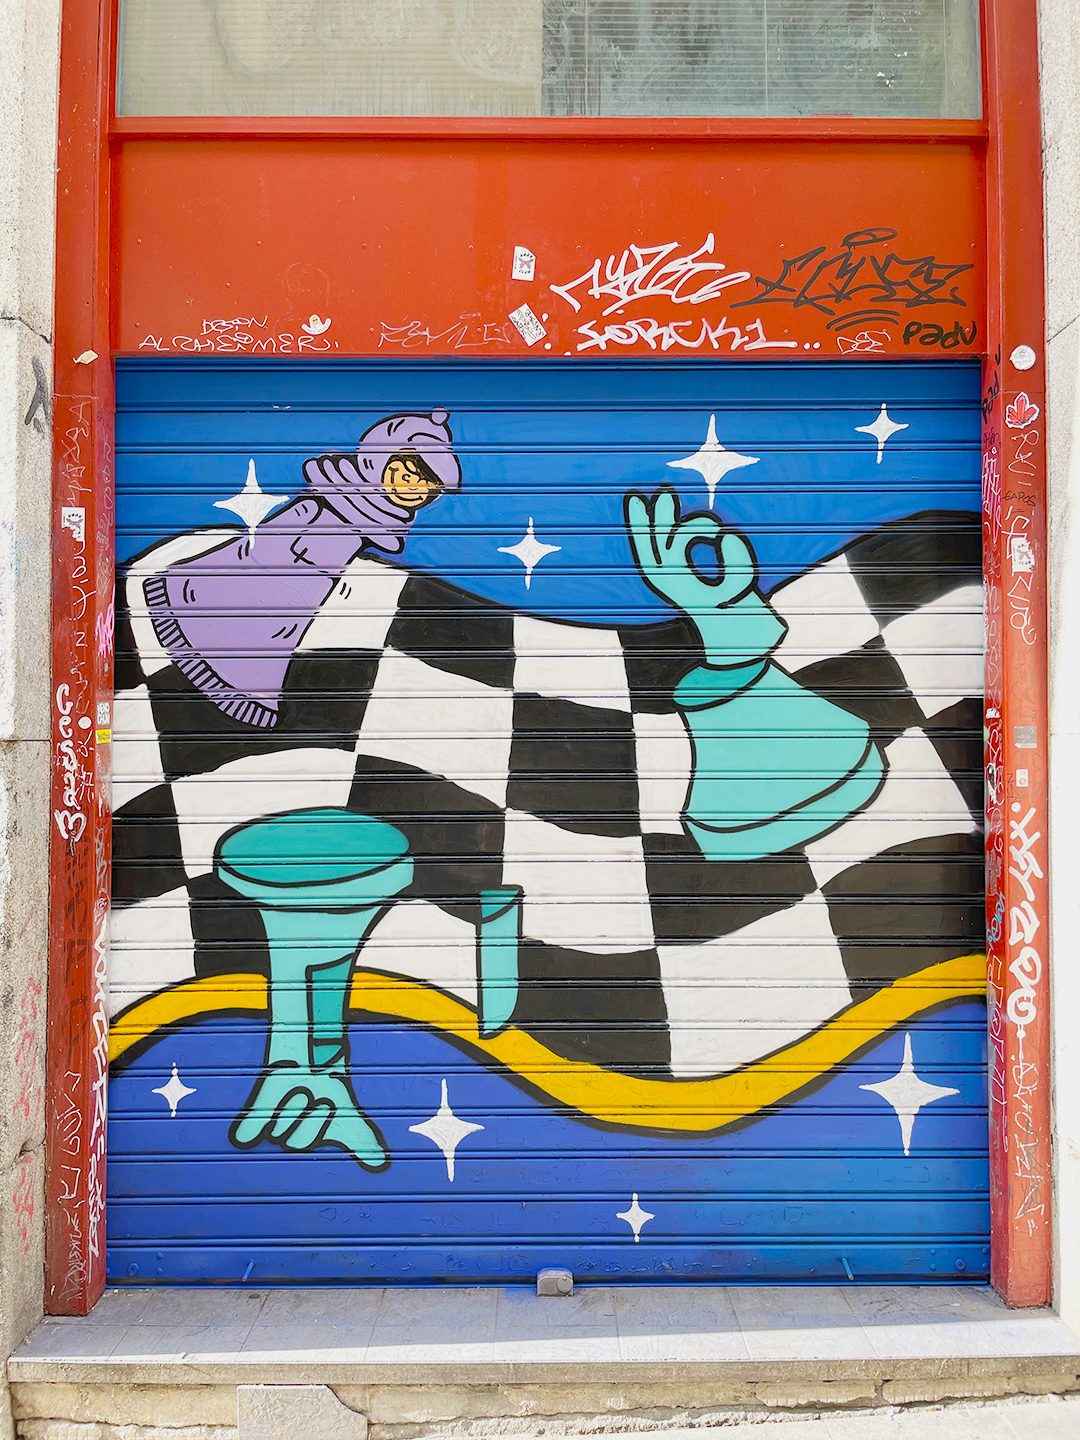 Chess Mural colaborativo por Gorka Gil y Stinky Wetsuit